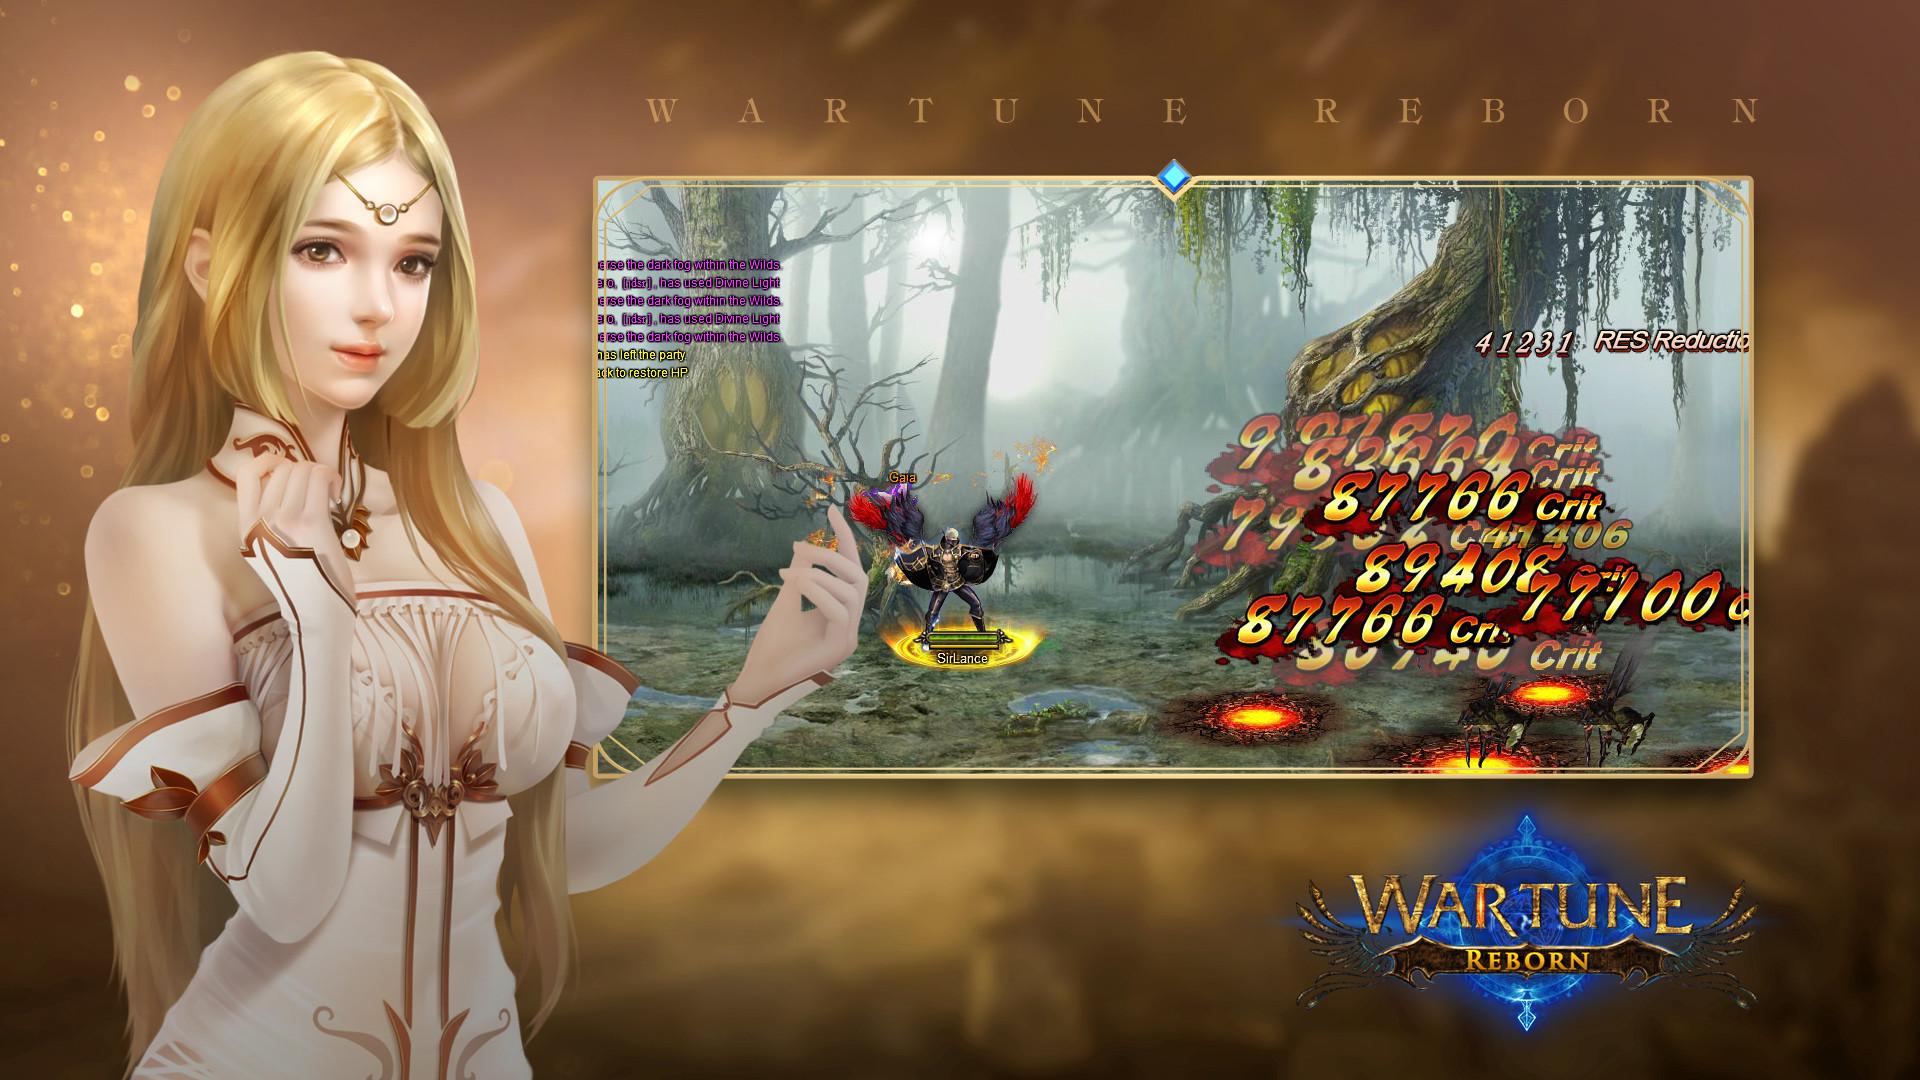 Screenshot №6 from game Wartune Reborn